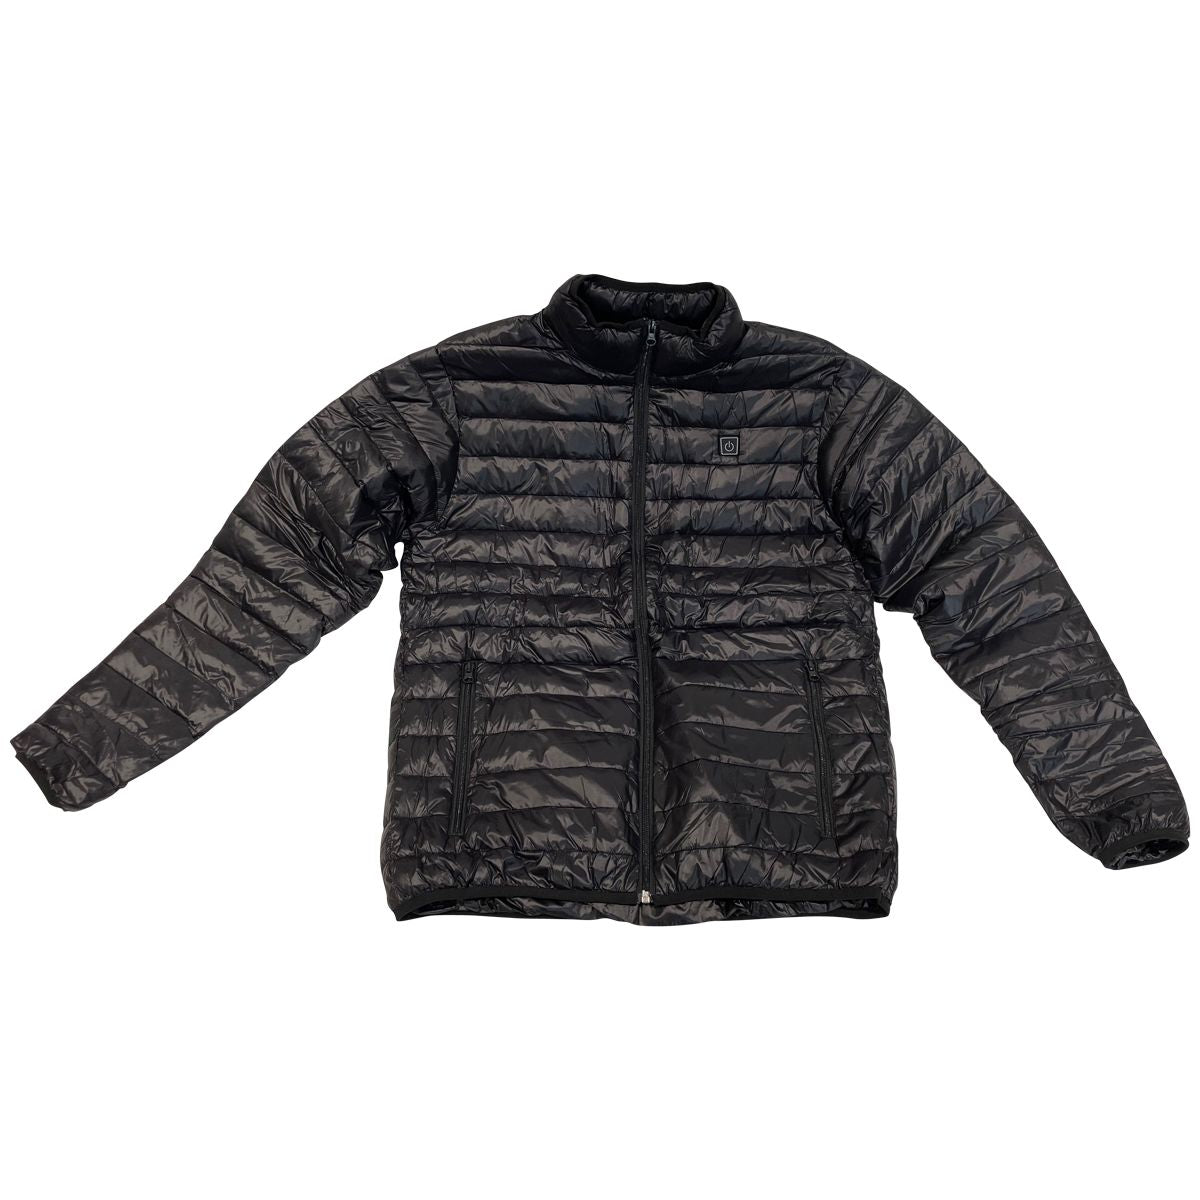 Zunix HEATJACKETL - Heated Jacket L Size